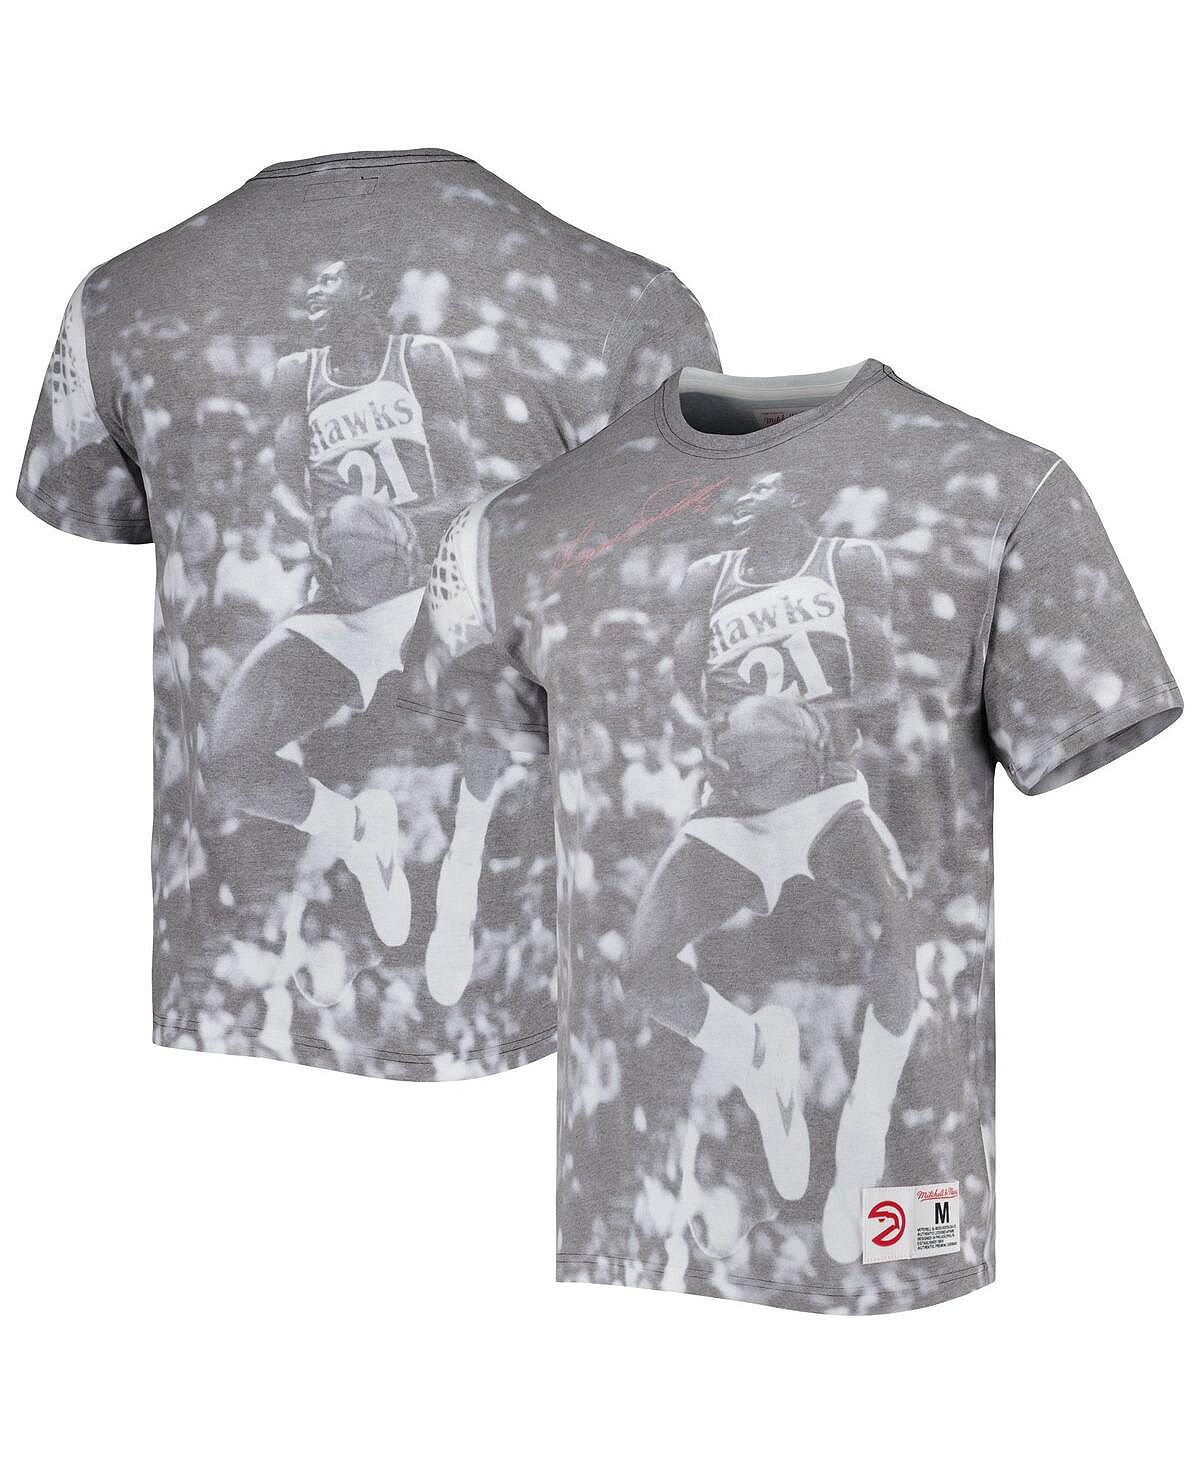 цена Мужская футболка dominique wilkins grey atlanta hawks above the rim с сублимацией Mitchell & Ness, серый